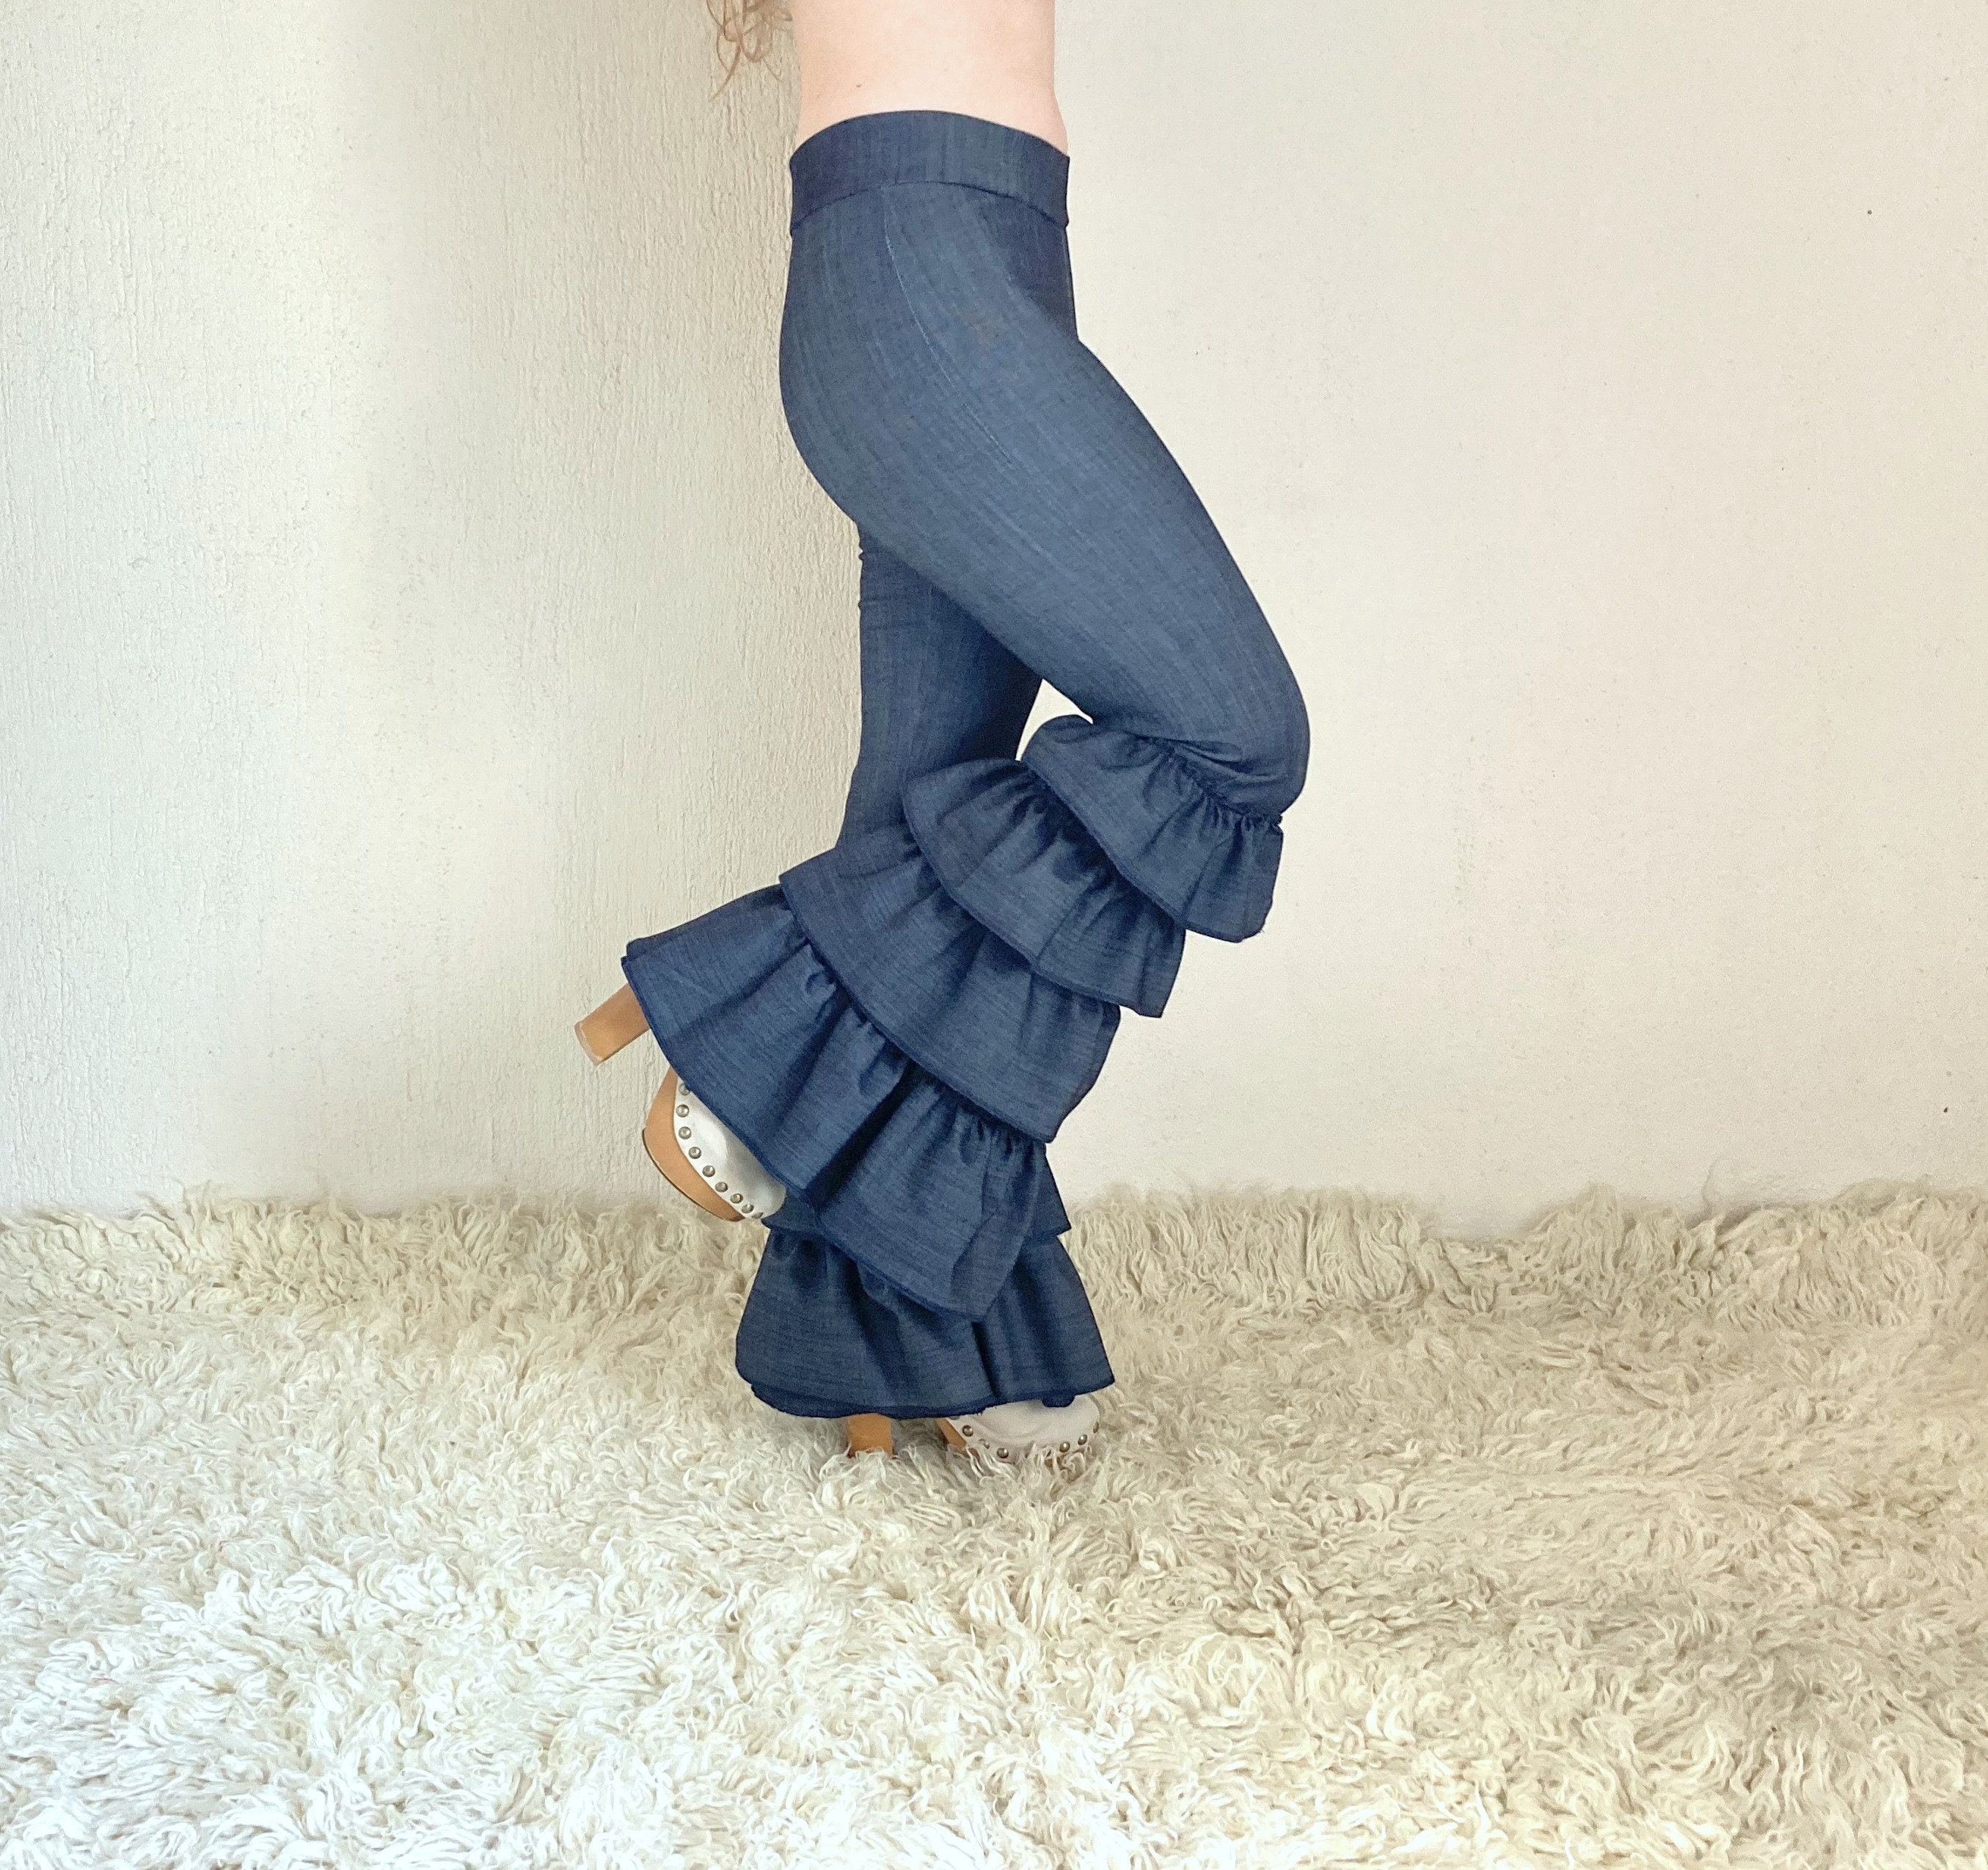 DIY Ruffle Pants in half the time! | Using denim shorts | #thriftflip  #Howto - YouTube